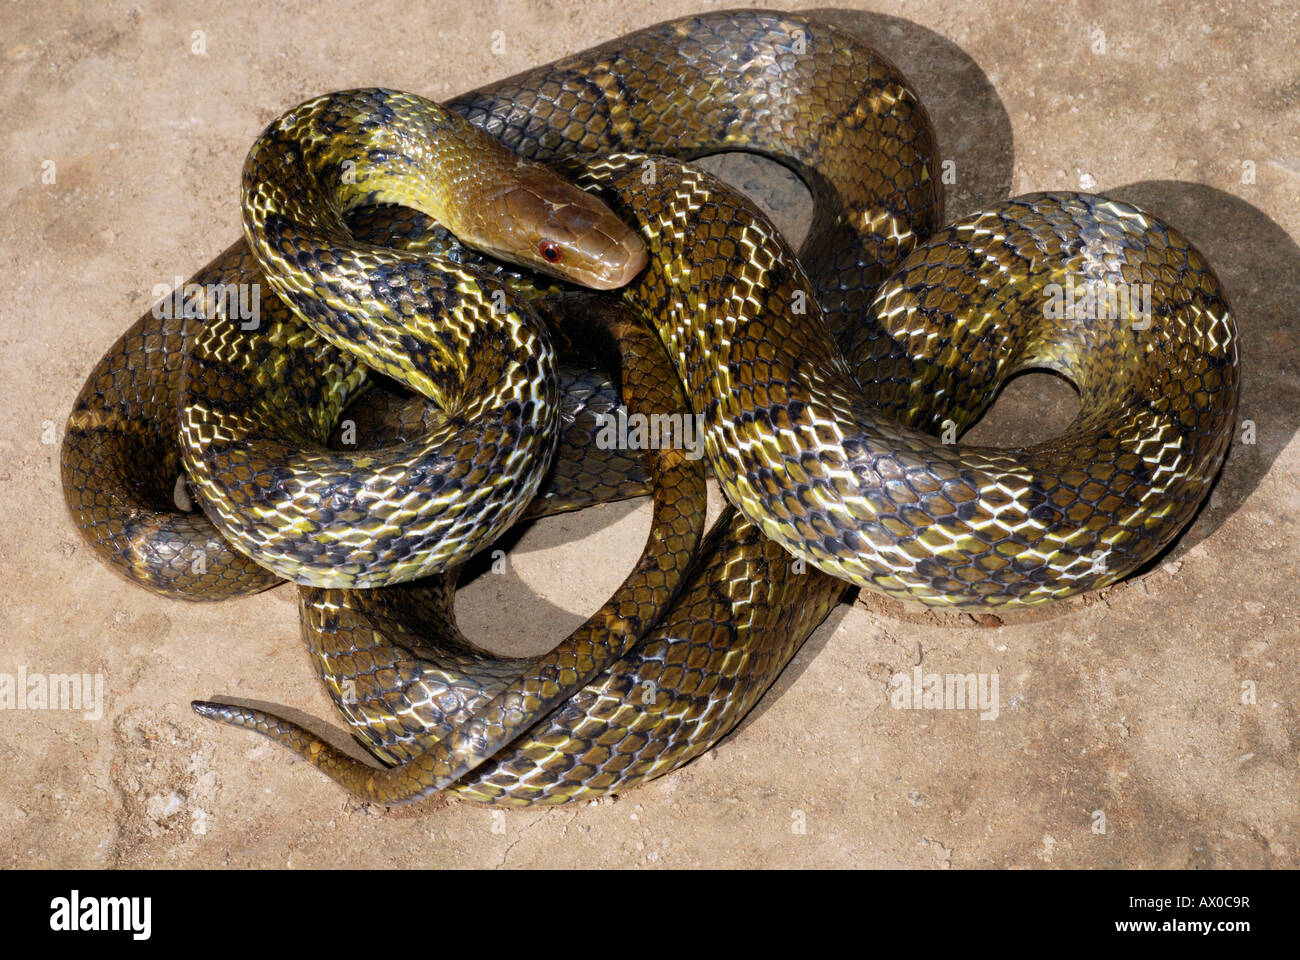 EASTERN TRINKET SNAKE, Elaphe helena, is a species of colubrid snake. Non Venomous, uncommon , N.E. Arunachal Pradesh India Stock Photo